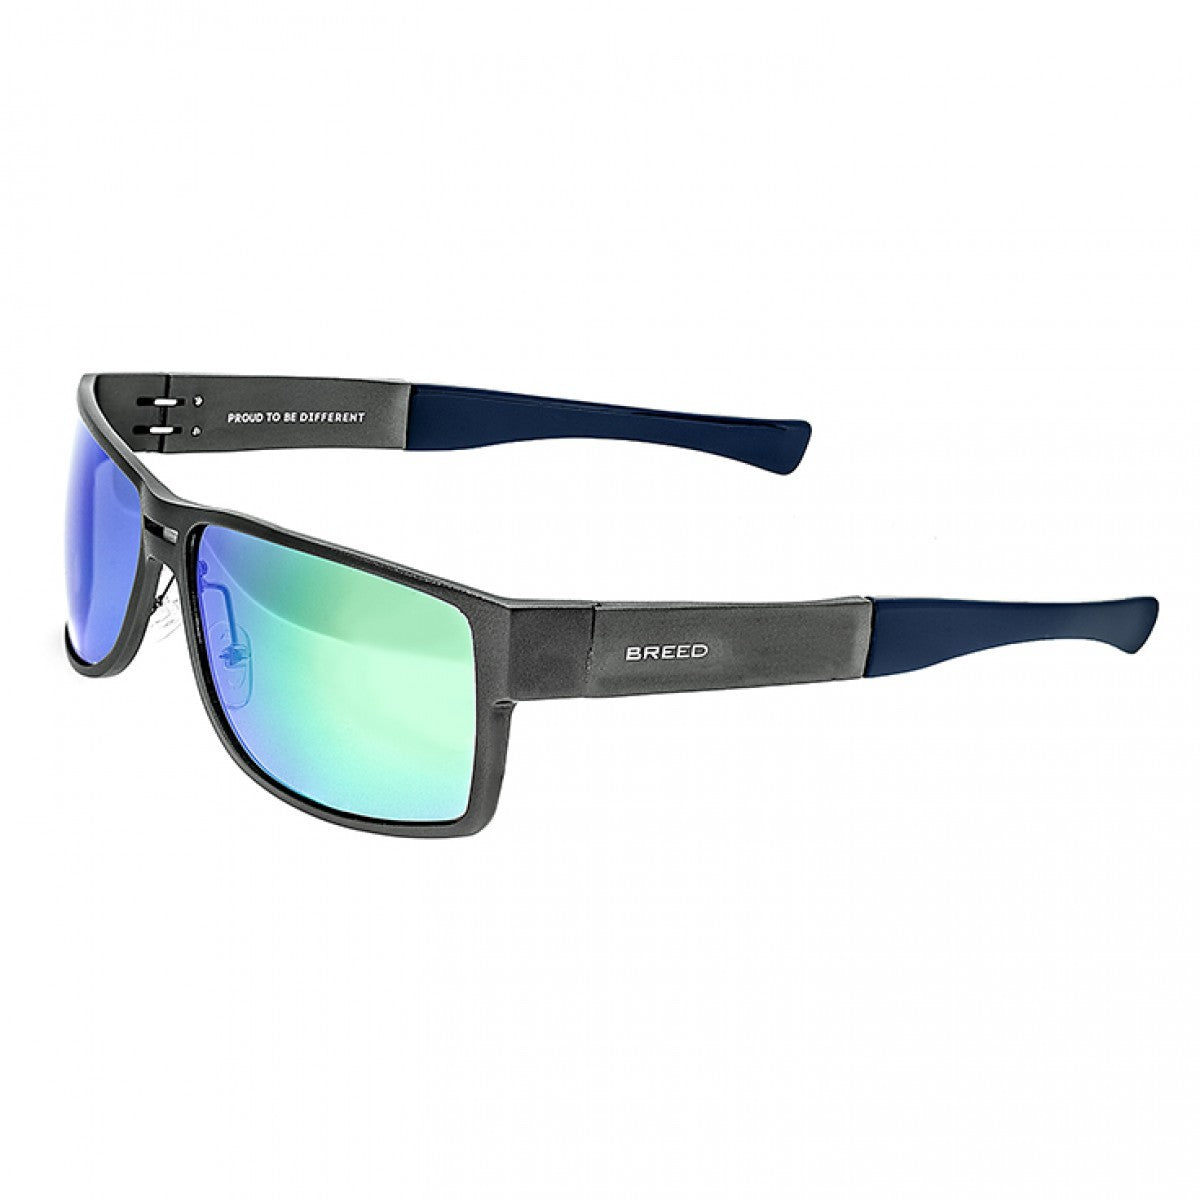 Breed Stratus Aluminium Polarized Sunglasses - Gunmetal/Green - BSG010SR